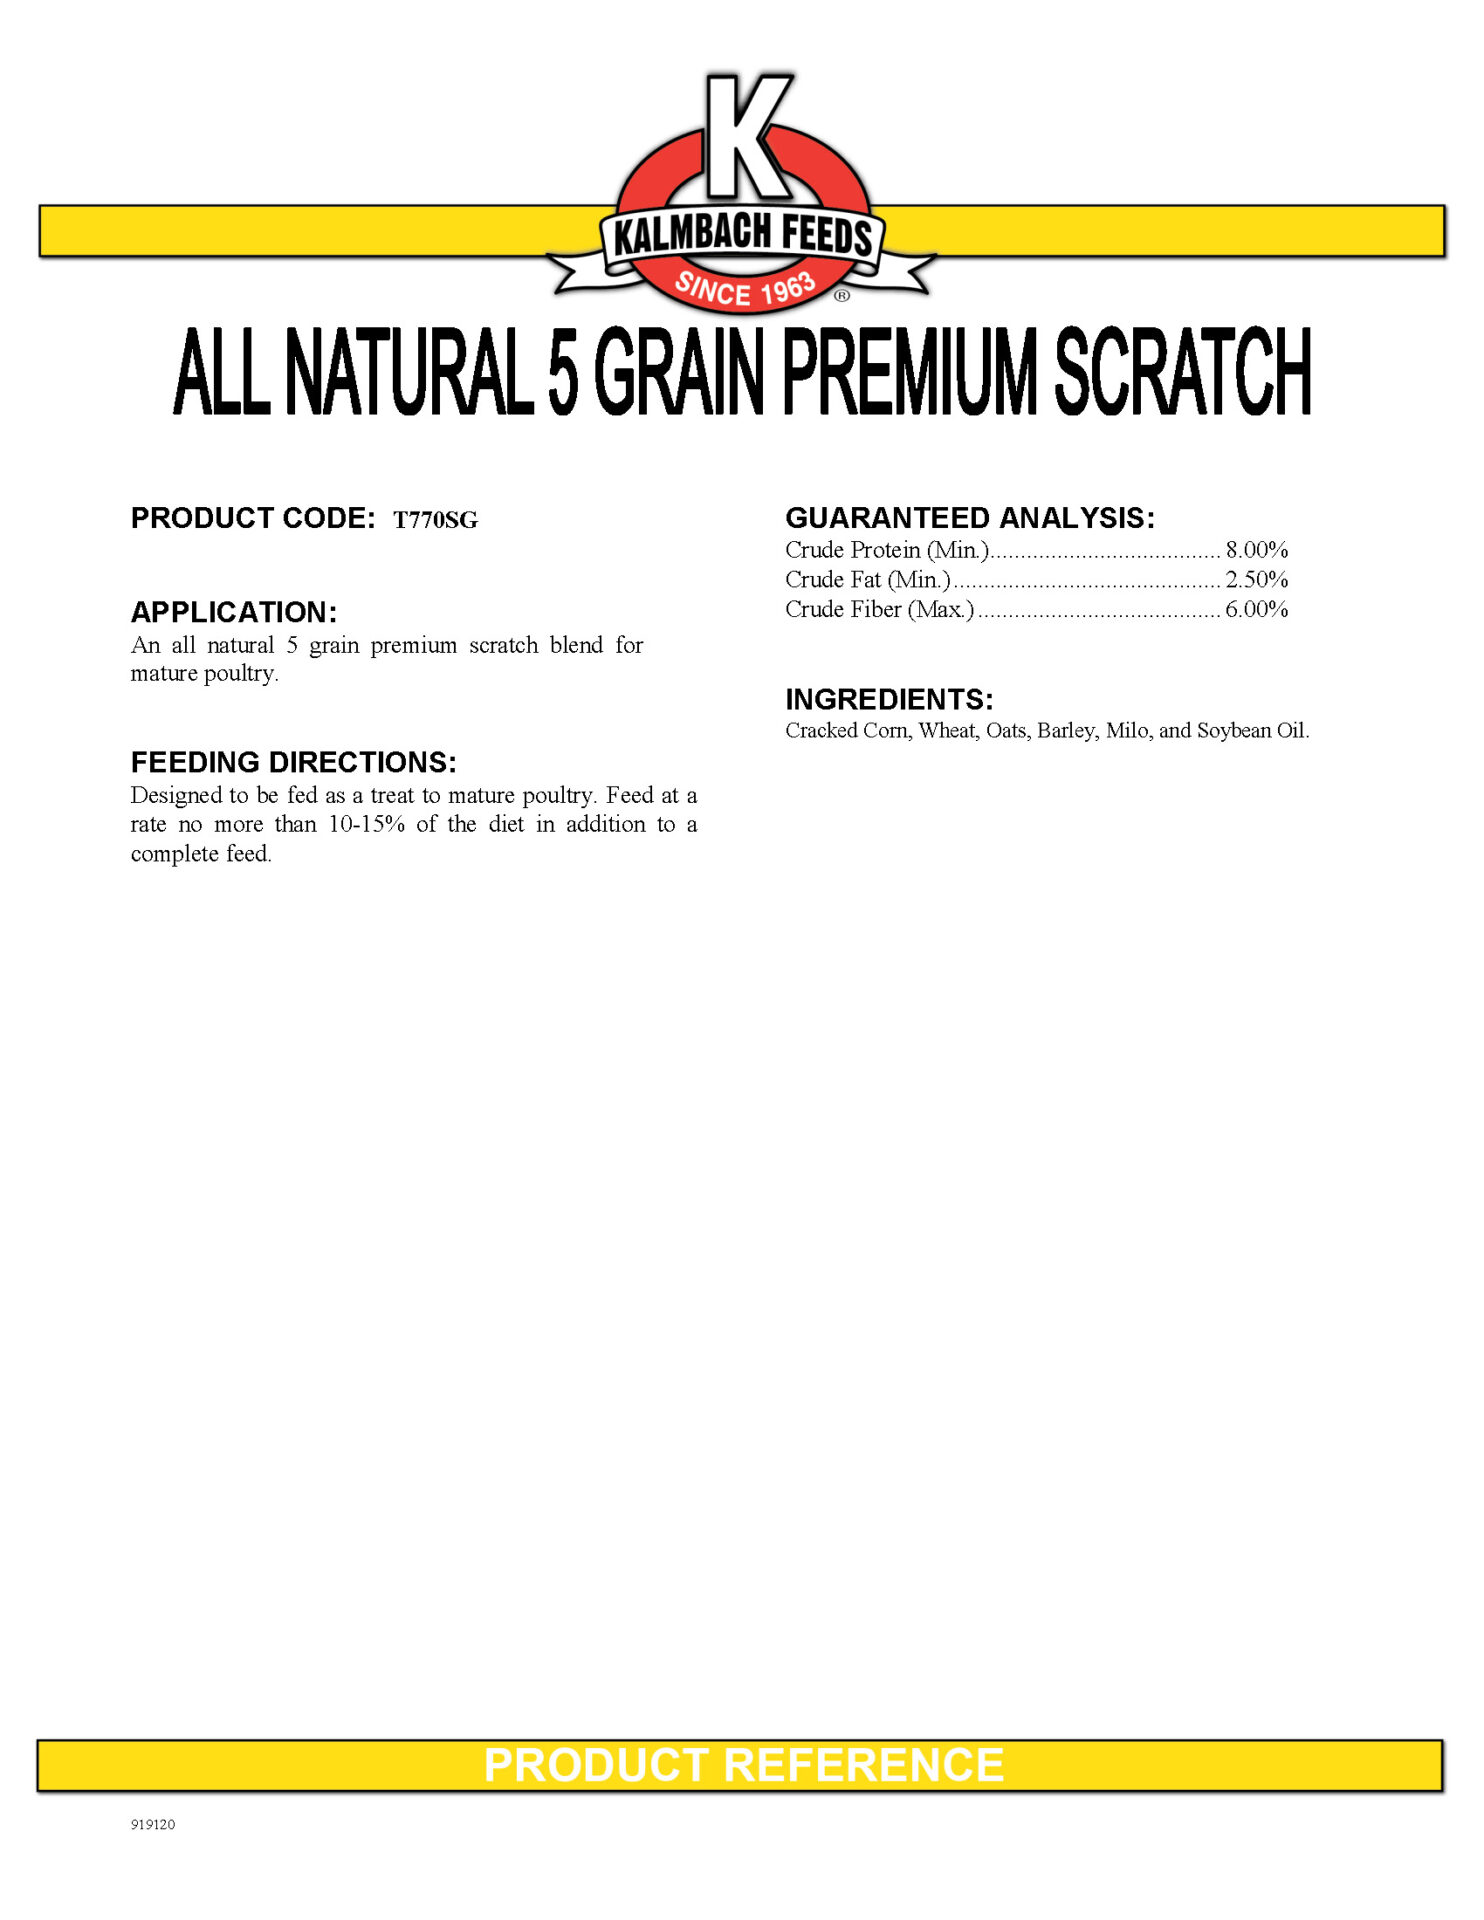 All Natural 5 Grain Premium Scratch feed spec sheet